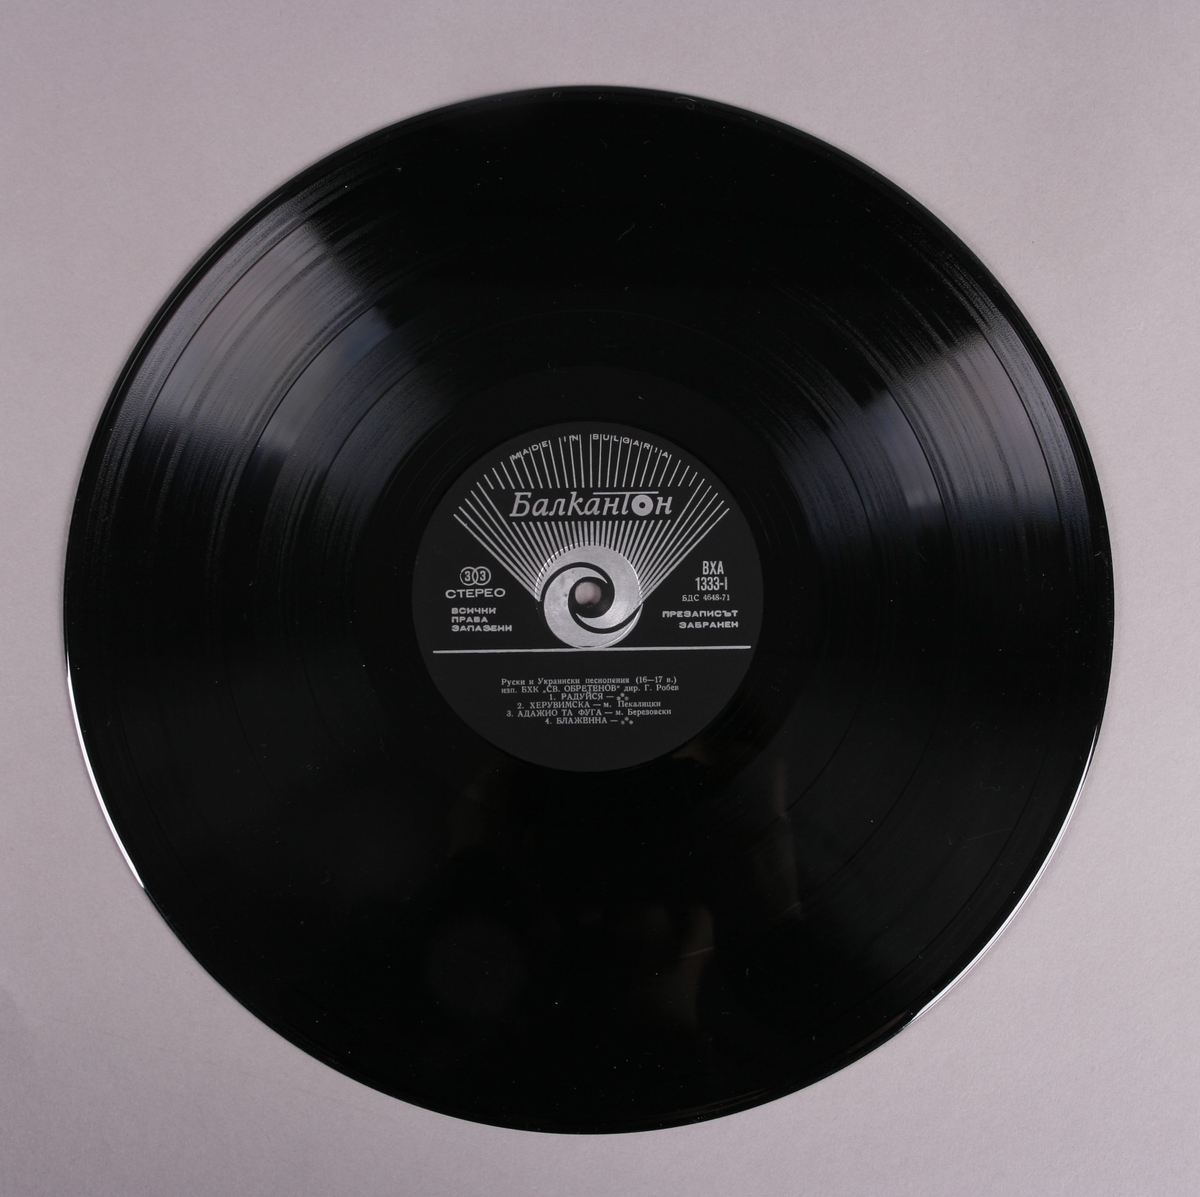 Grammofonplate i svart vinyl med plateosmalg av papir. Platen ligger i en plastlomme.